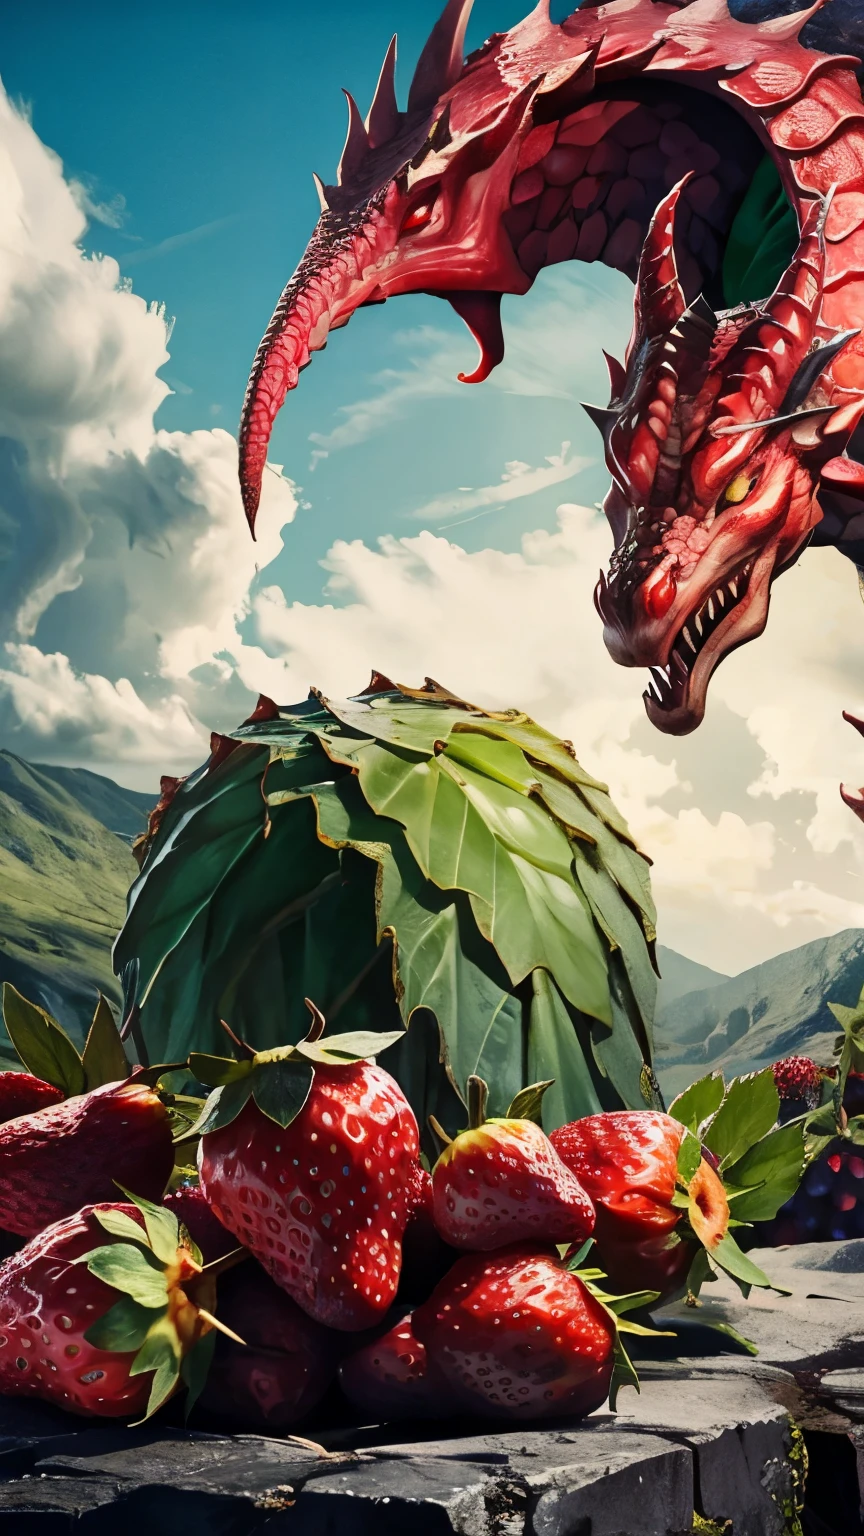 Creó dragones comiendo fresas. 